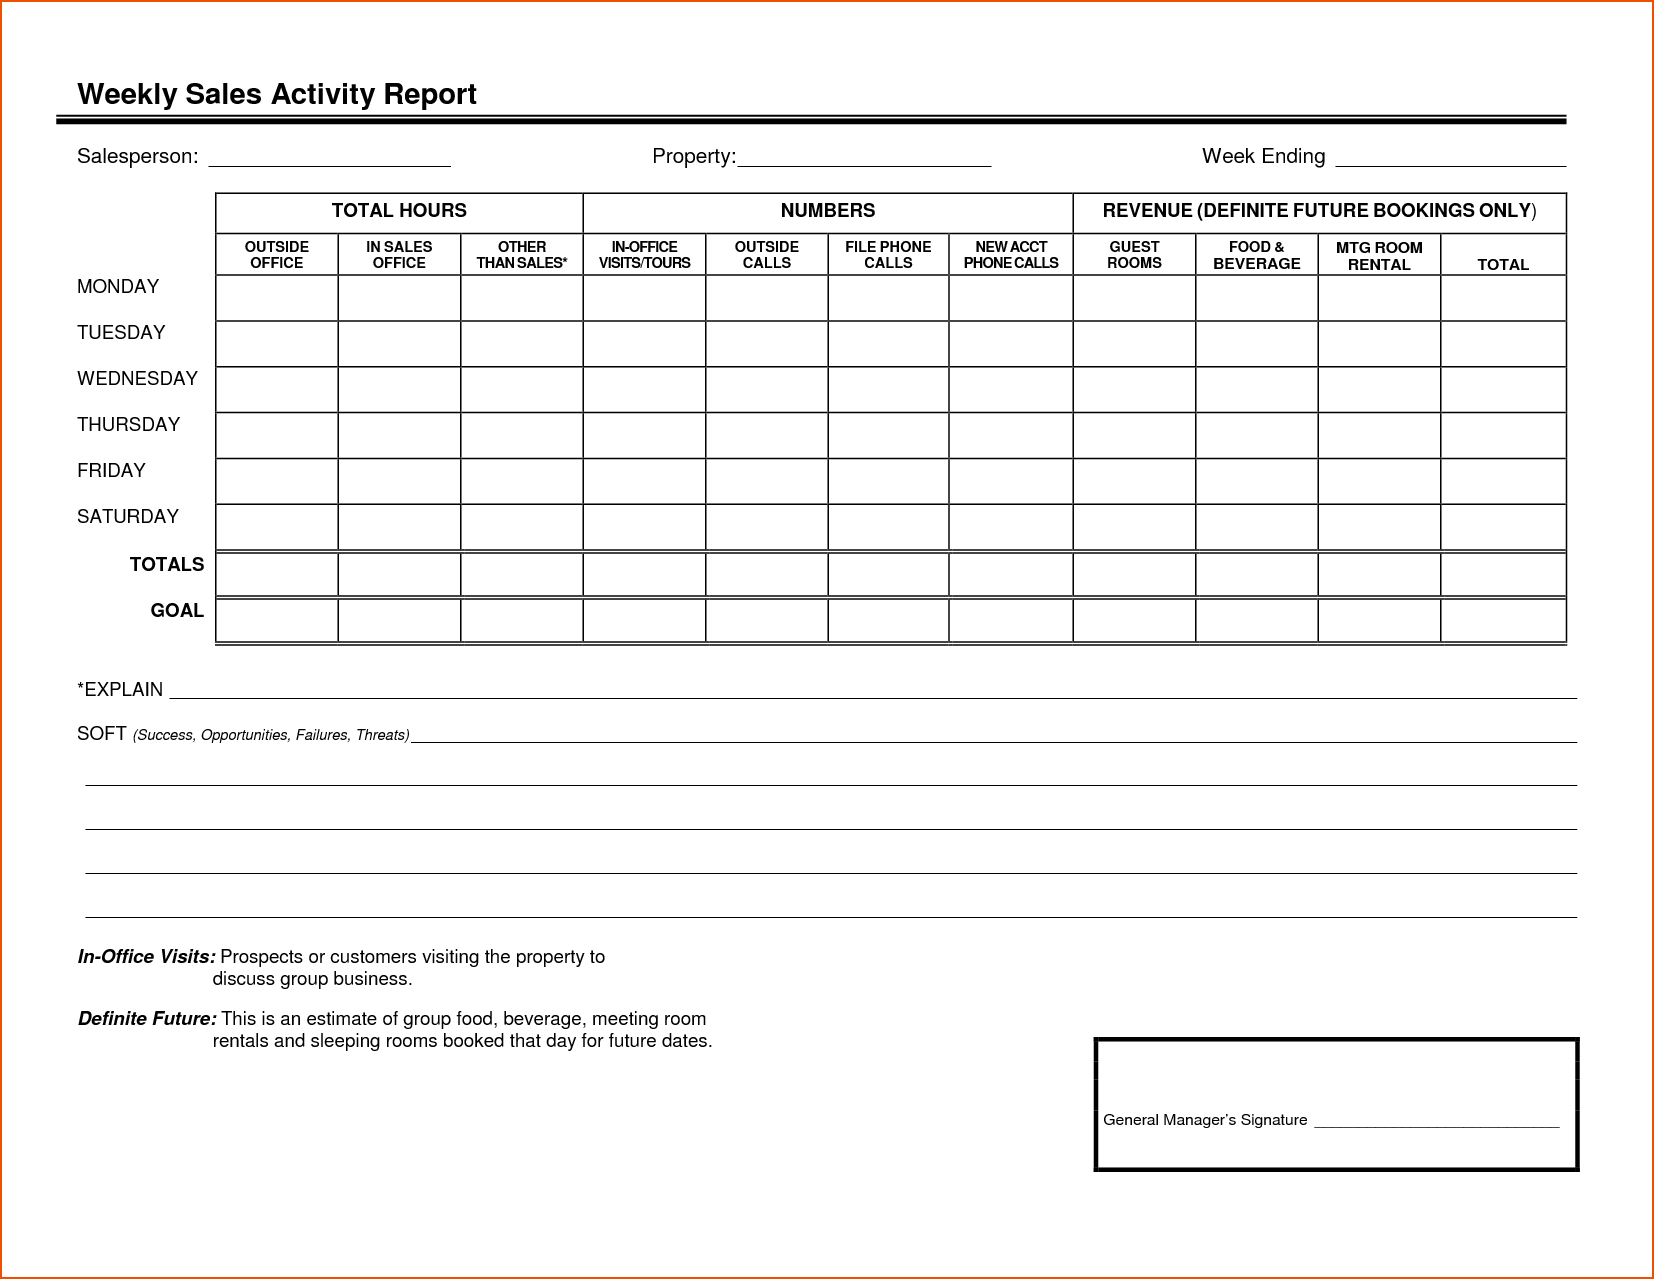 Sales Visit Report Template Downloads - Atlantaauctionco Inside Sales Visit Report Template Downloads